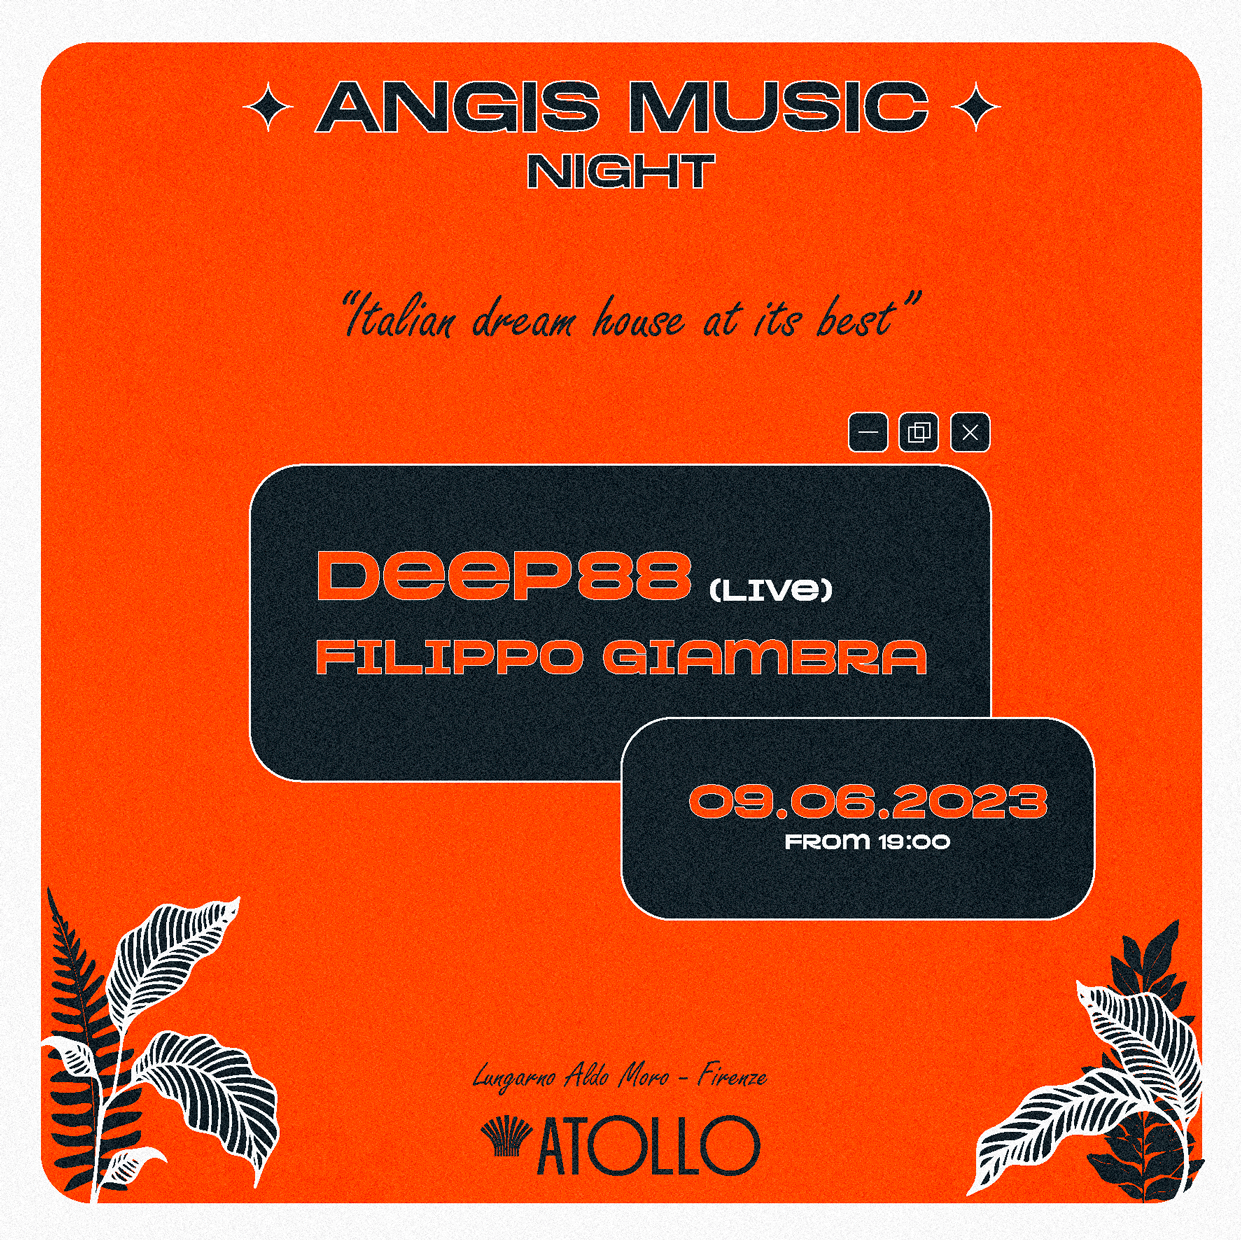 Angis Music presenta Deep88 live - フライヤー表